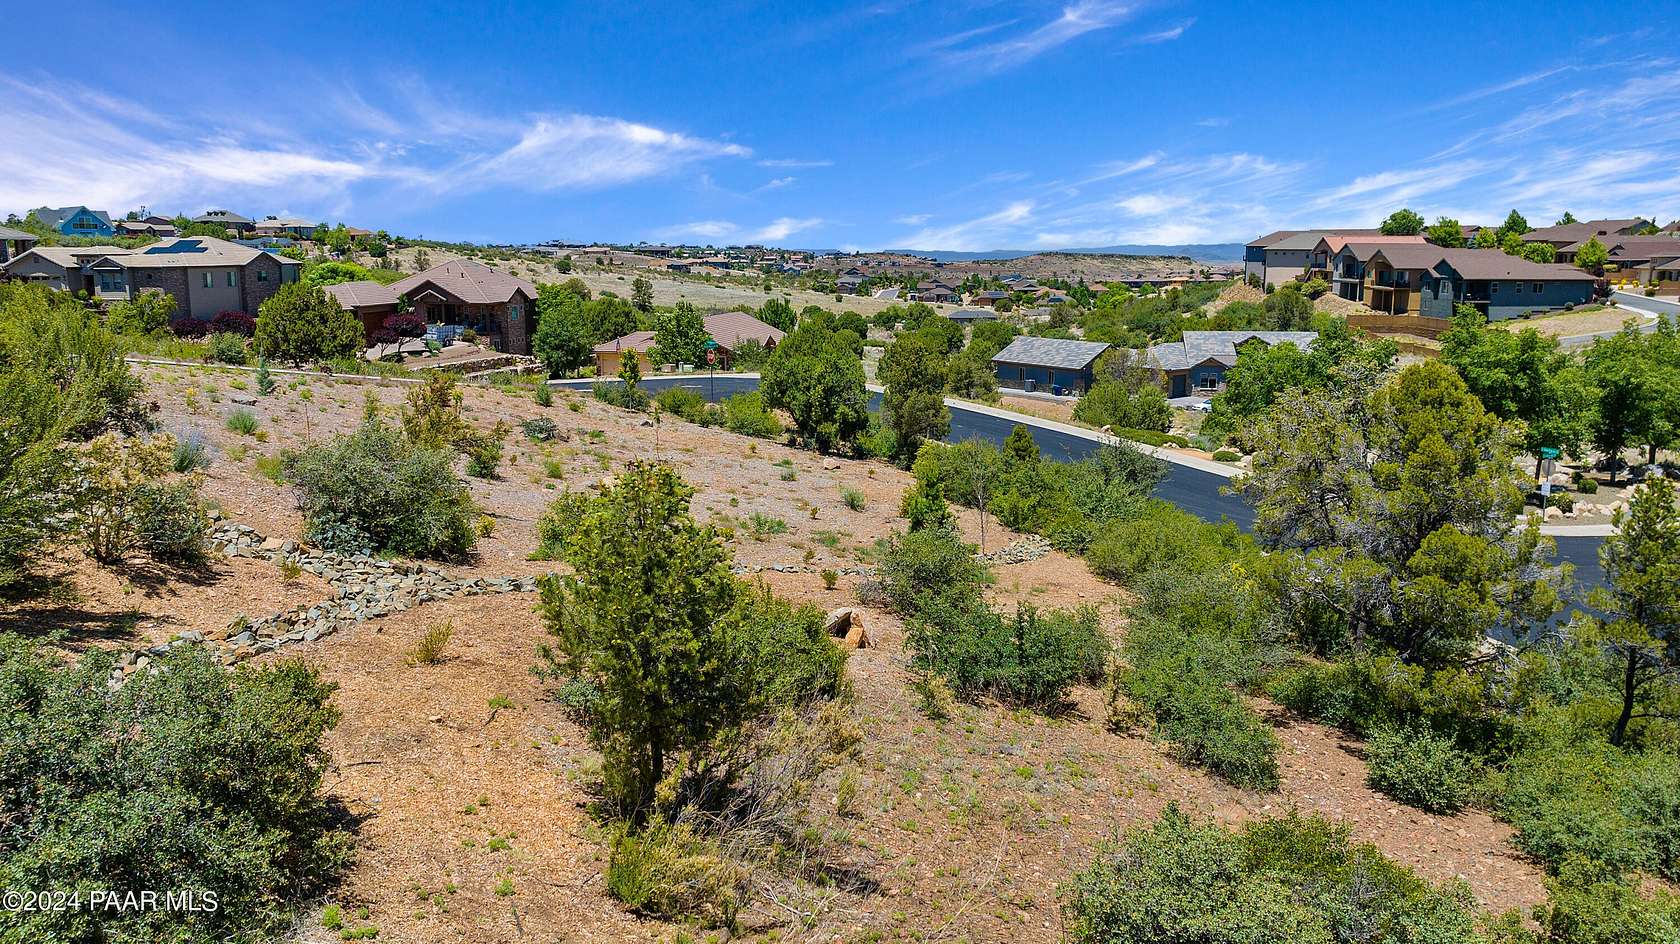 0.42 Acres of Residential Land for Sale in Prescott, Arizona